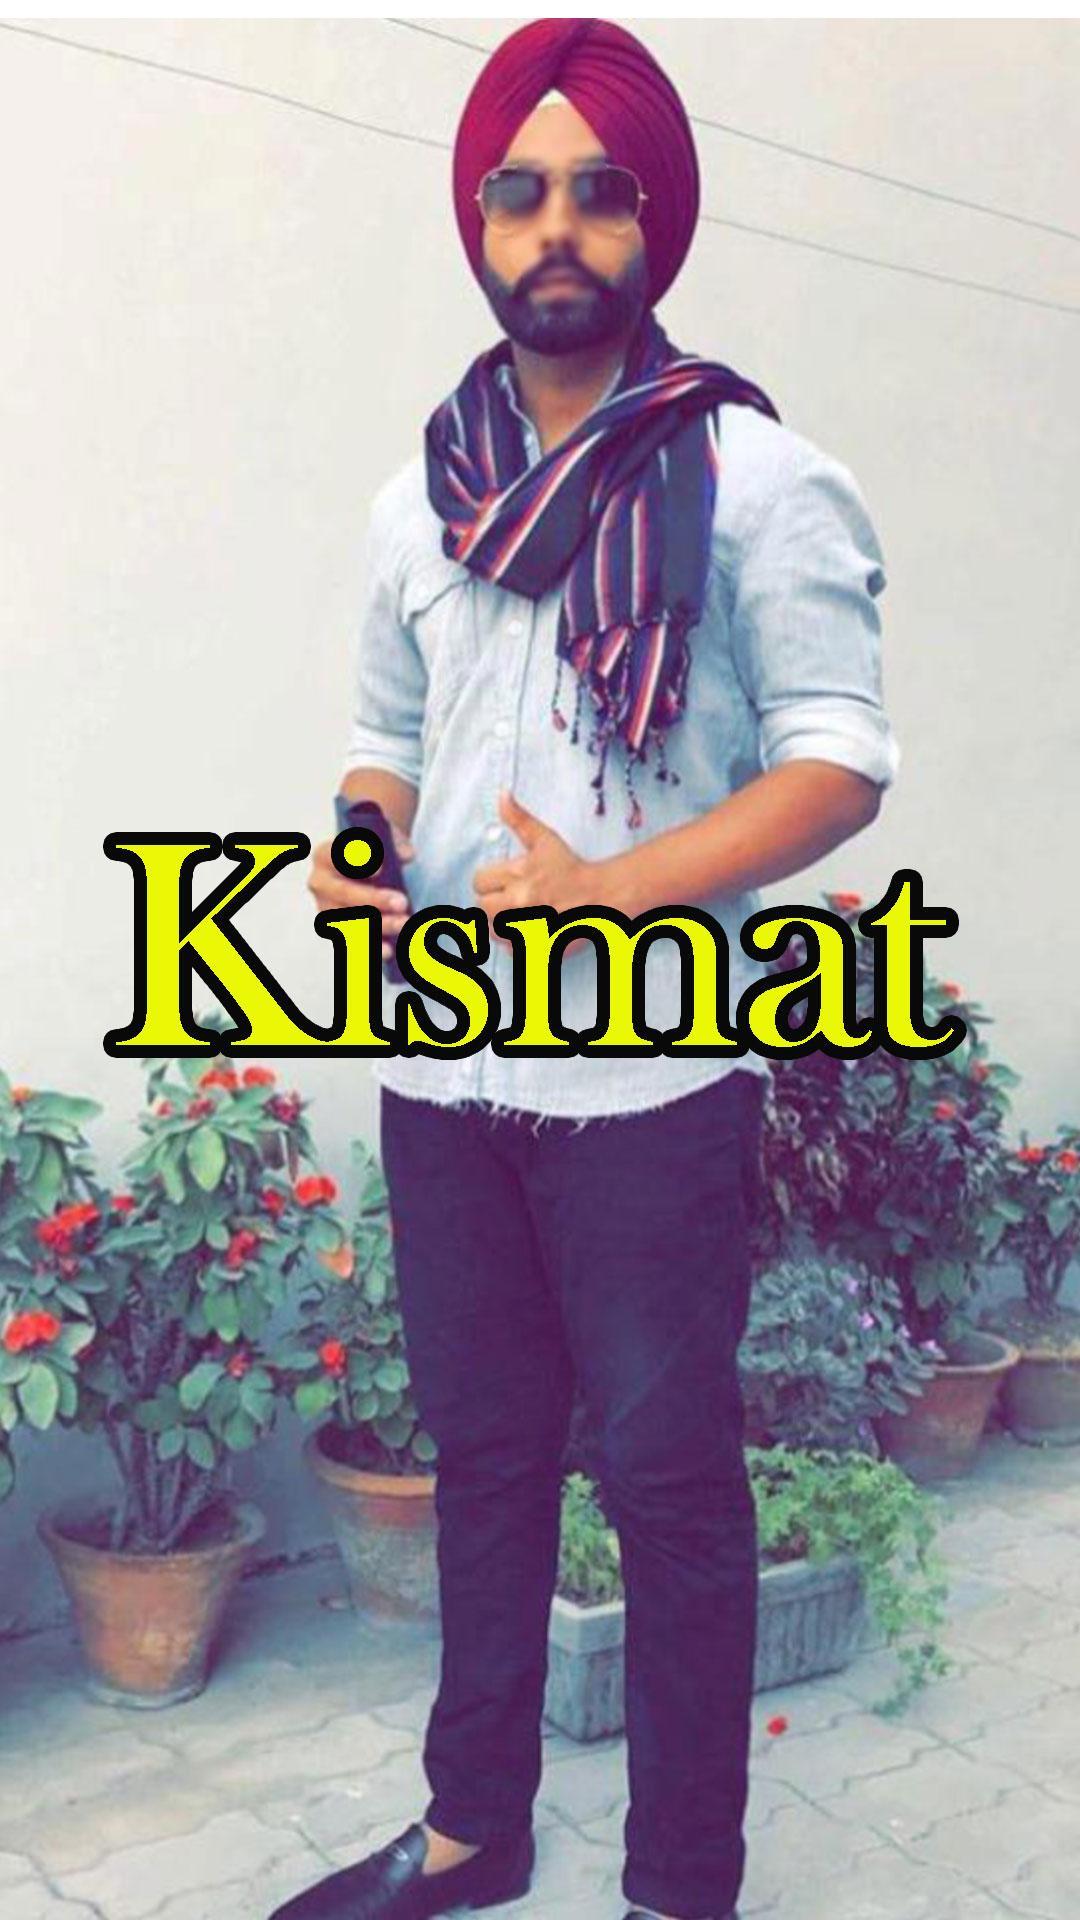 Kismat New Punjabi Movie For Android Apk Download Download latest bollywood hollywood torrent full movies, download hindi dubbed, tamil , punjabi. kismat new punjabi movie for android